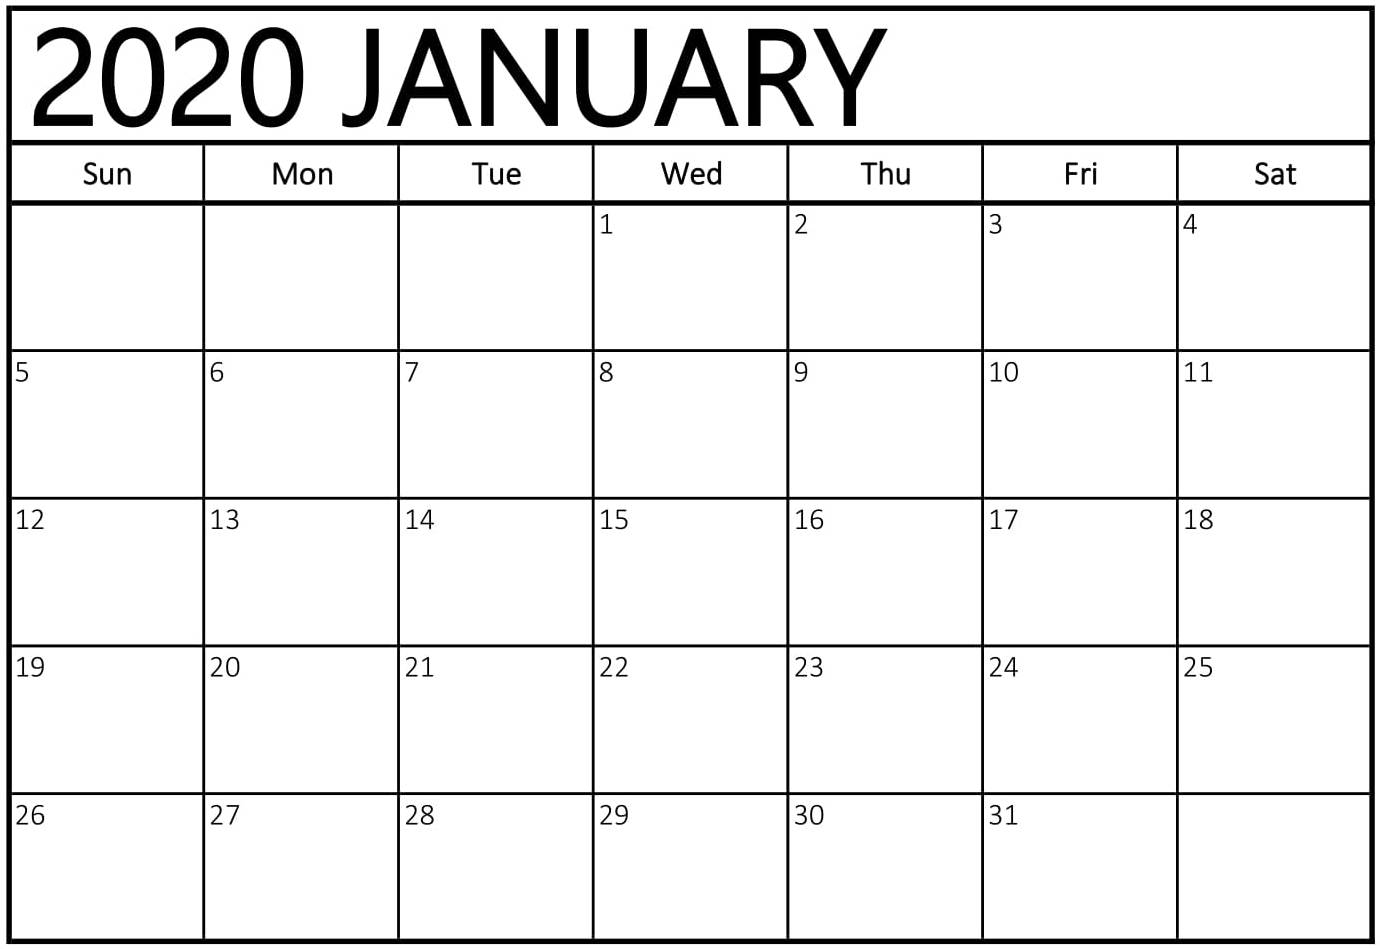 January 2020 Calendar New Zealand - Cerno.mioduchowski